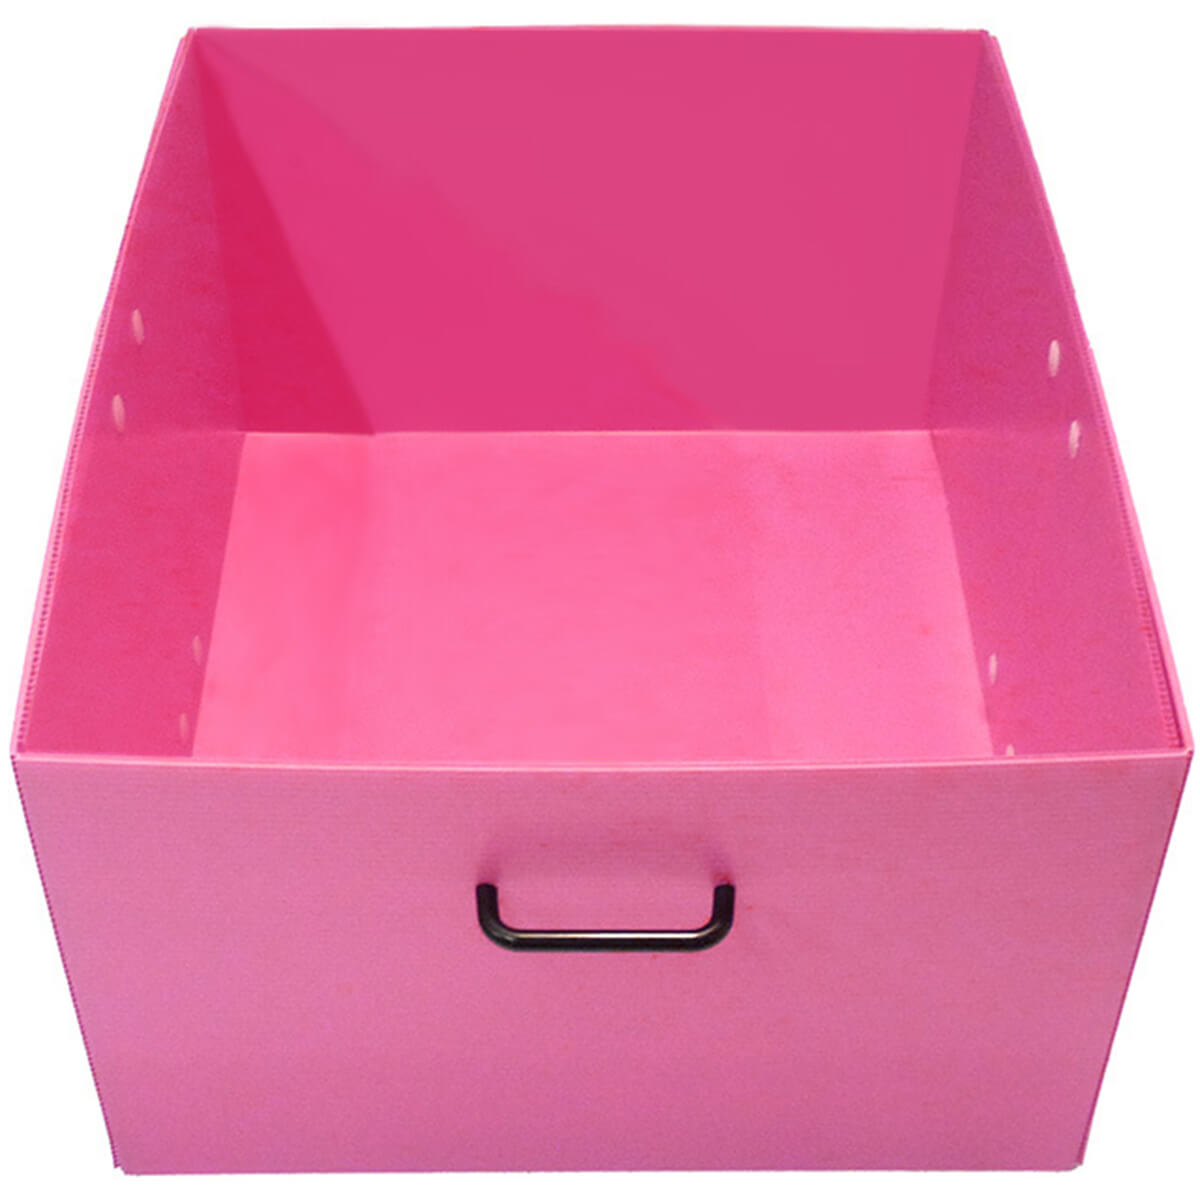 pink plastic toy box